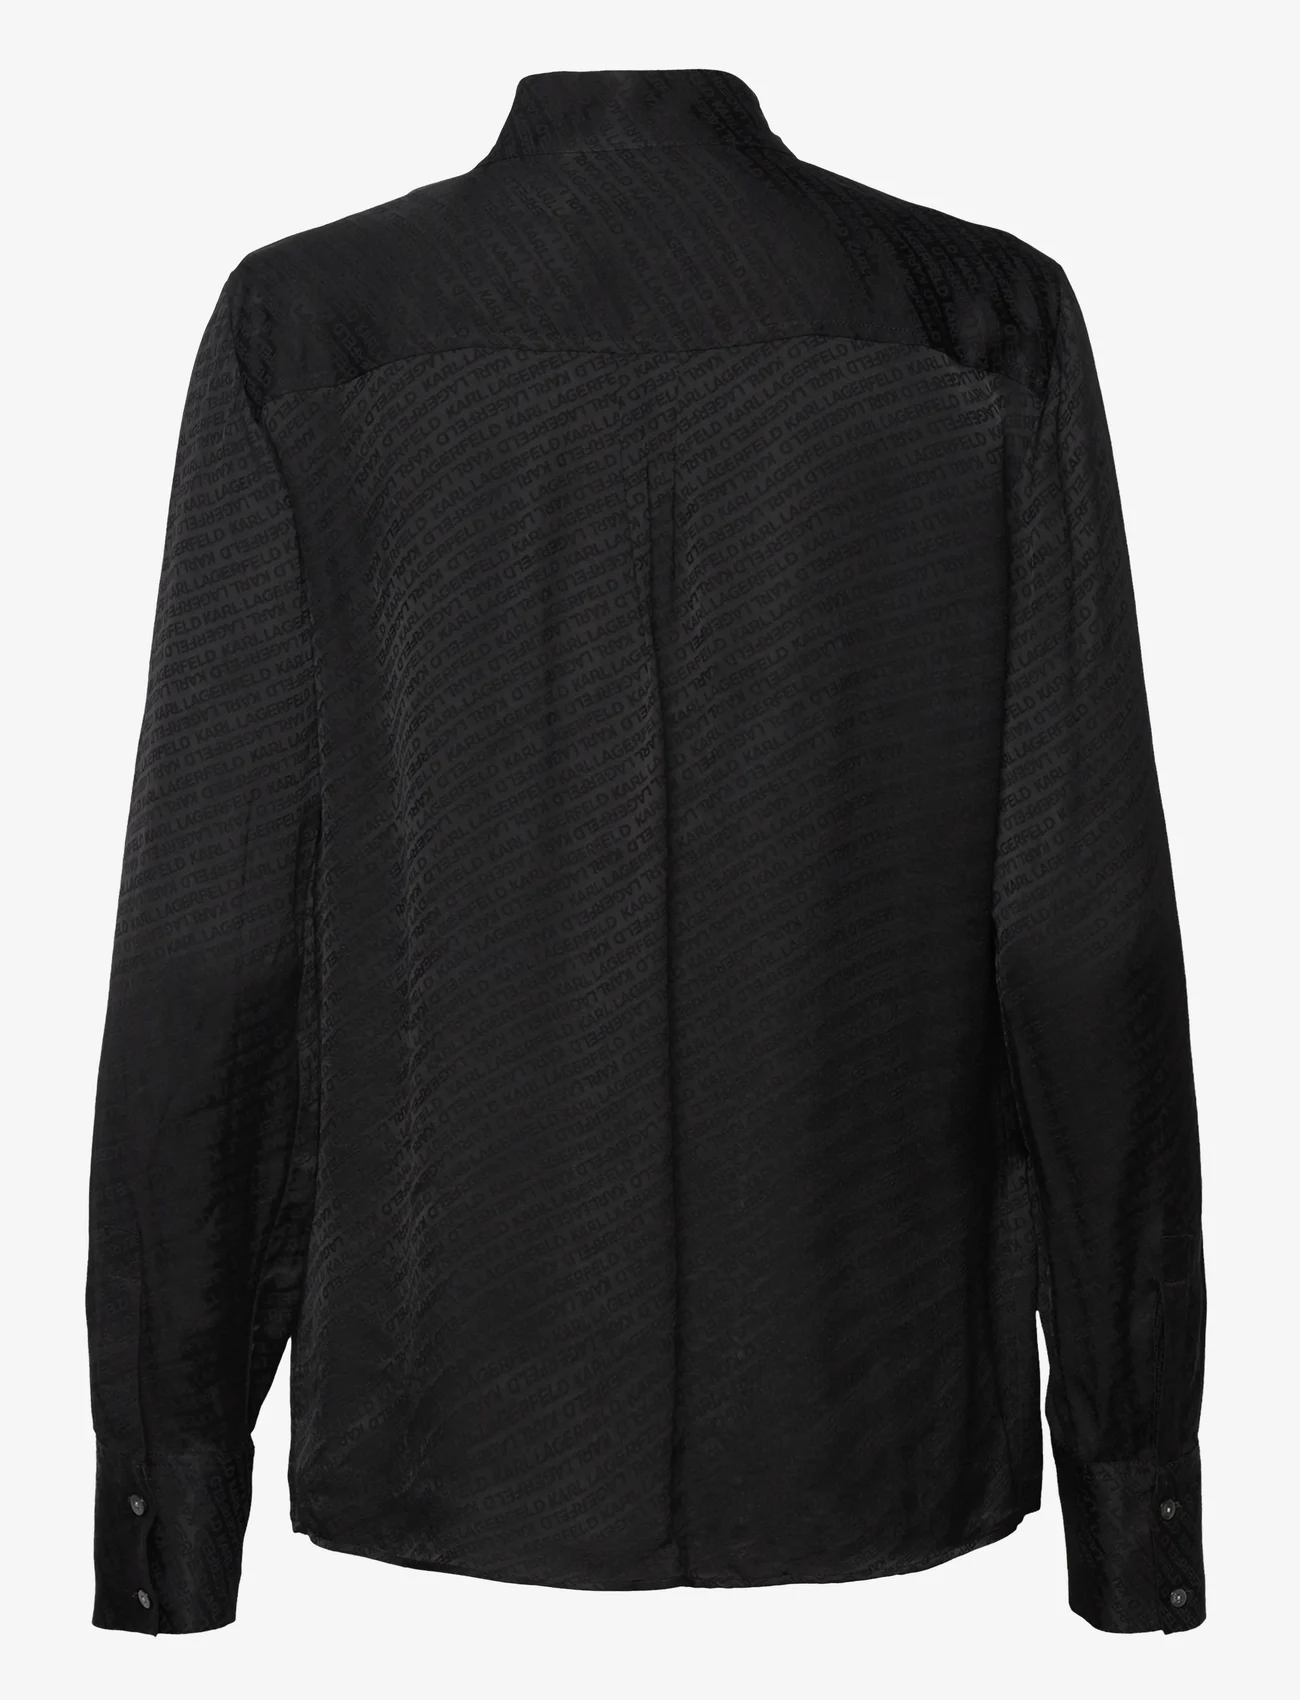 Karl Lagerfeld - Logo Jacquard Ruffle Shirt - blūzes ar garām piedurknēm - black - 1